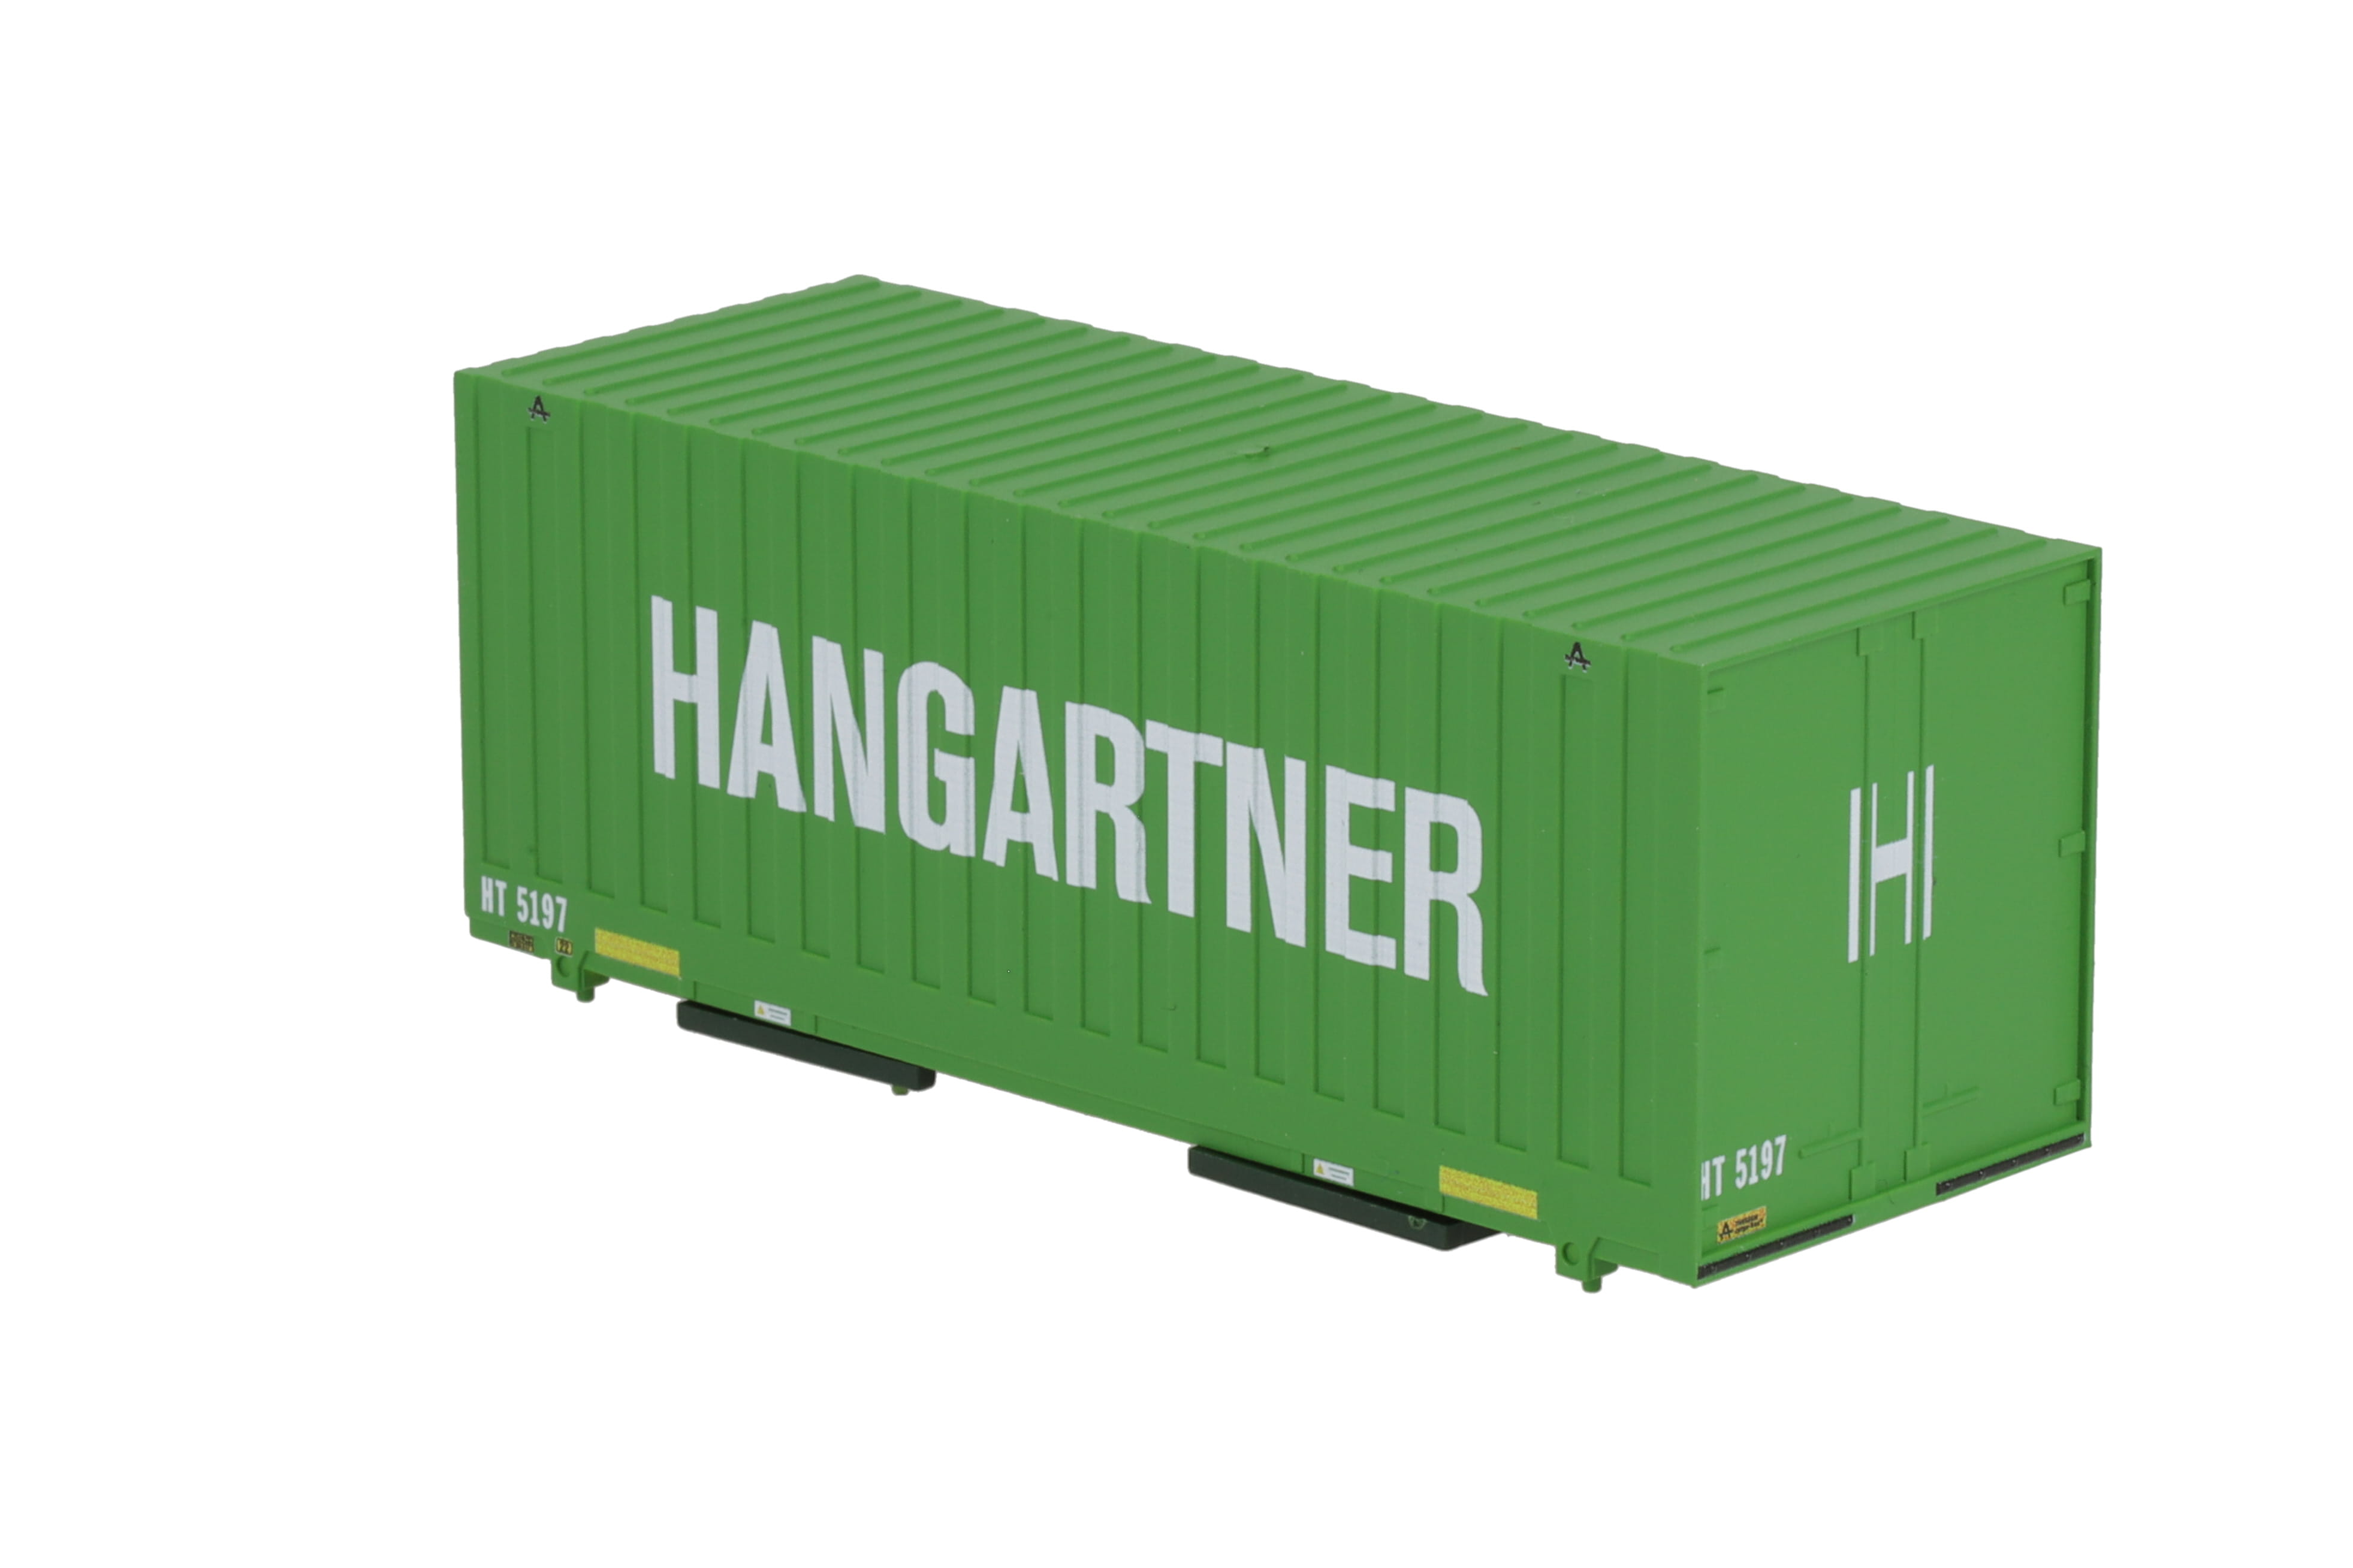 1:87 Container WB-C715 HANGAR Wechselbehälter WB-C 715 Thyssen Cargo-Box, Aufschrift: HANGARTNER, grün, Behälter-Nr: HT 5197